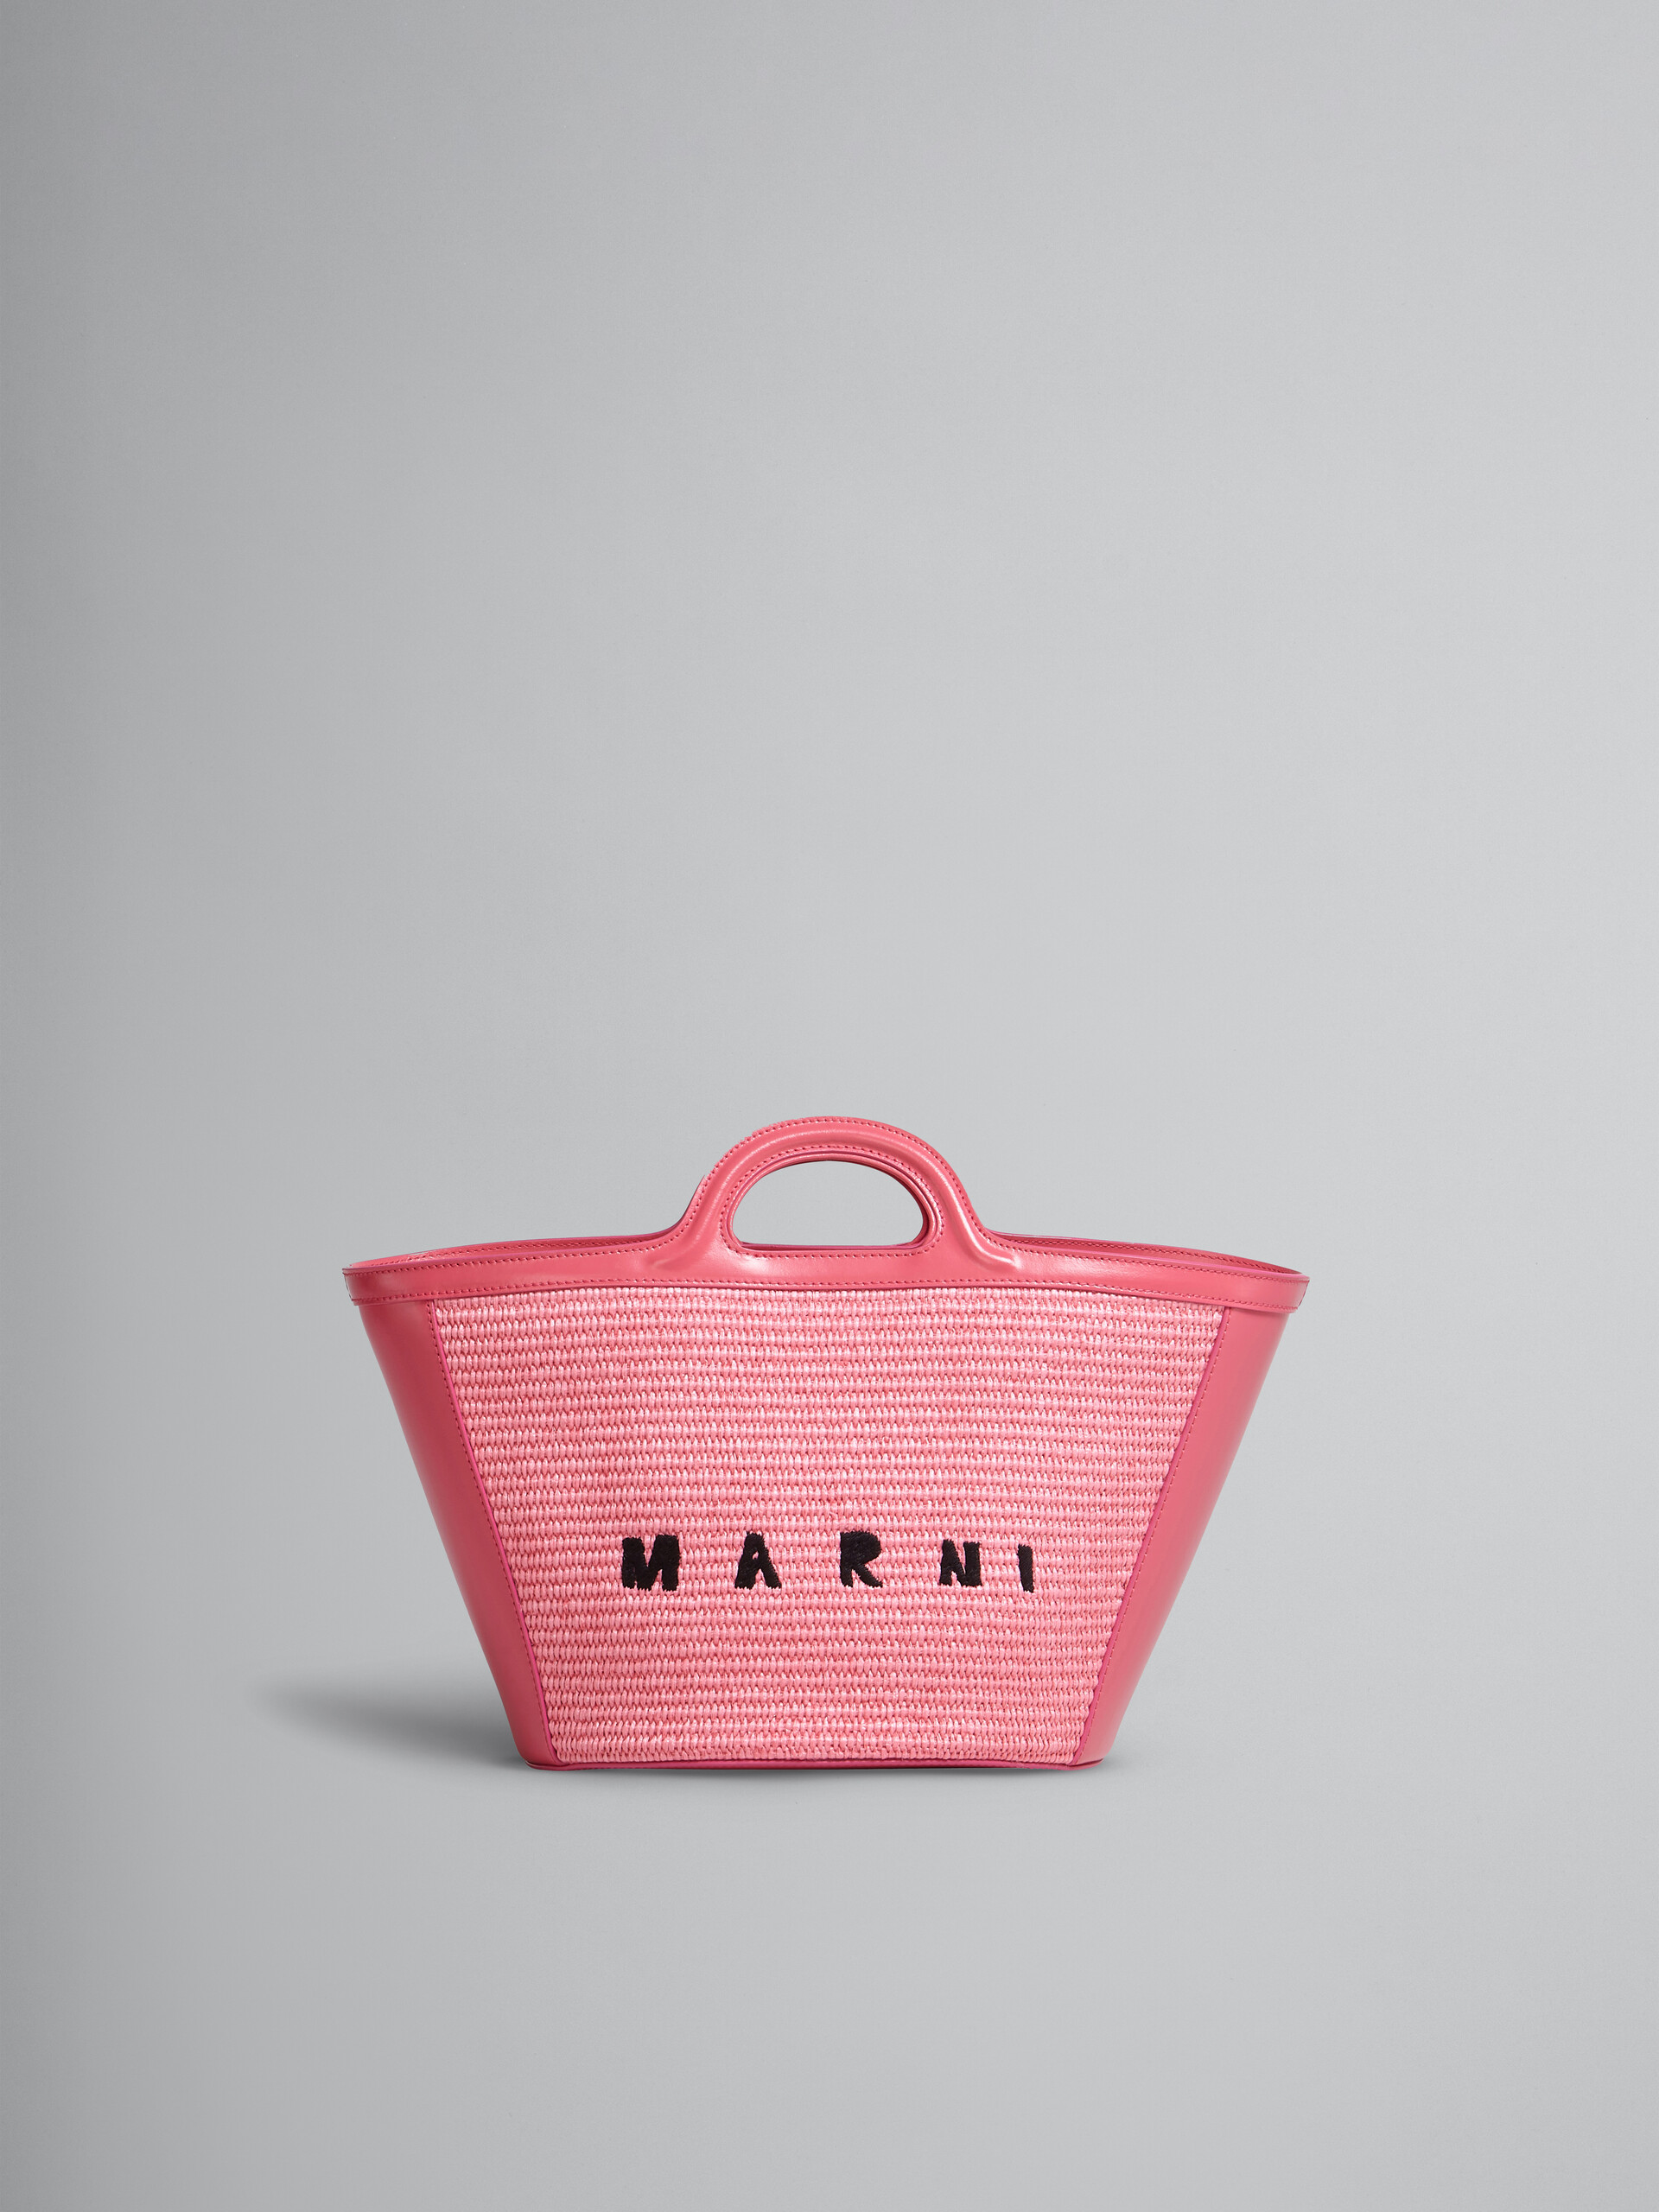 TROPICALIA small bag in pink leather and raffia - Handbag - Image 1